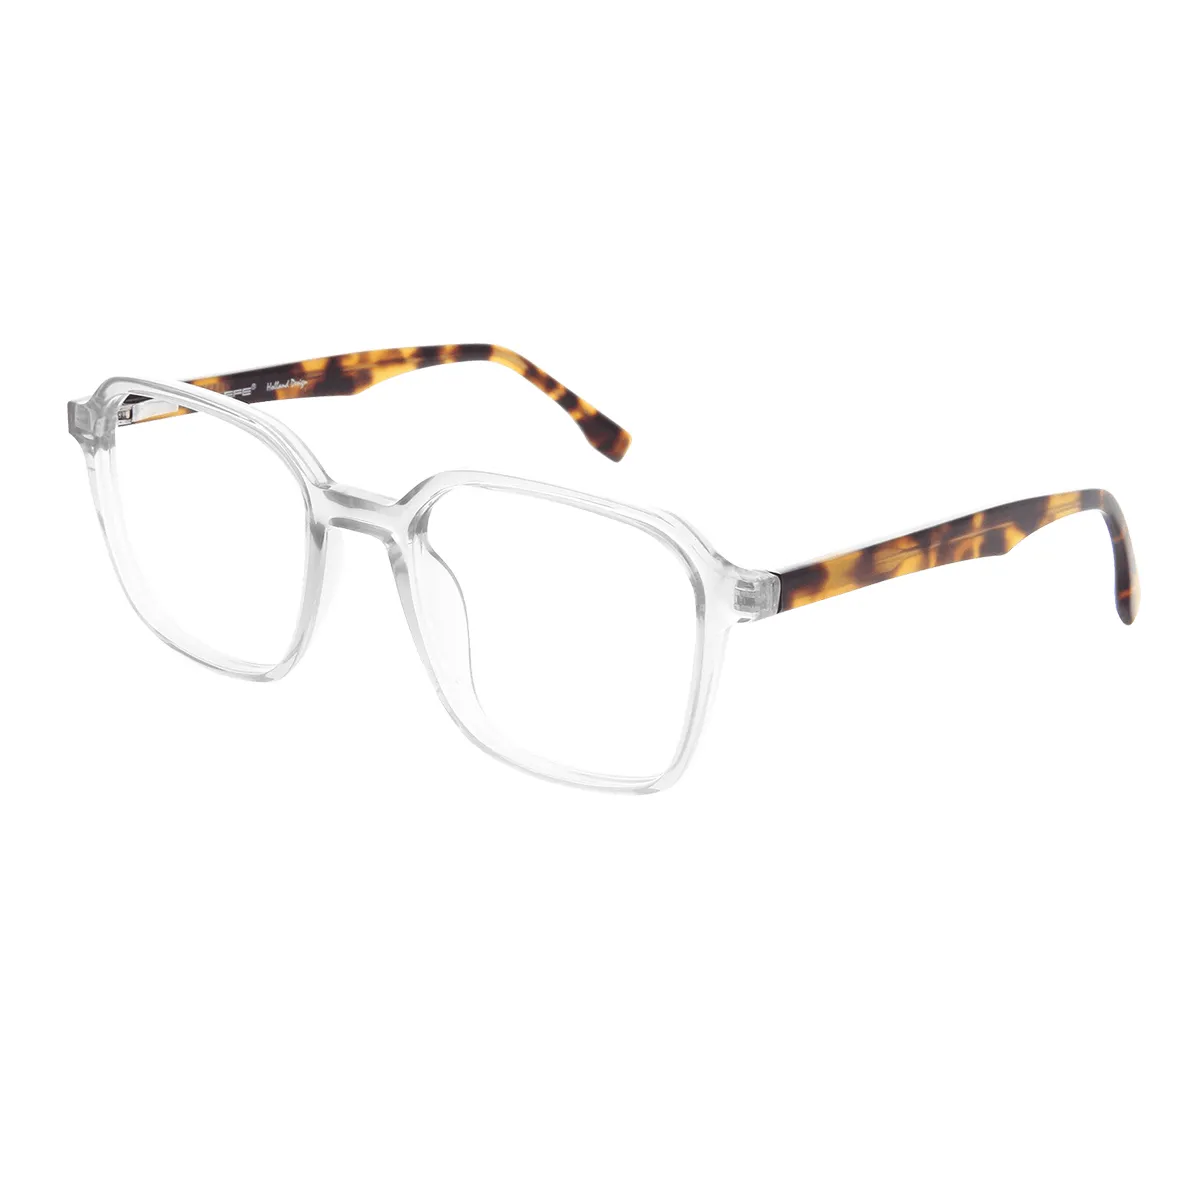 Guthrie - Square Translucent Glasses for Men & Women - EFE